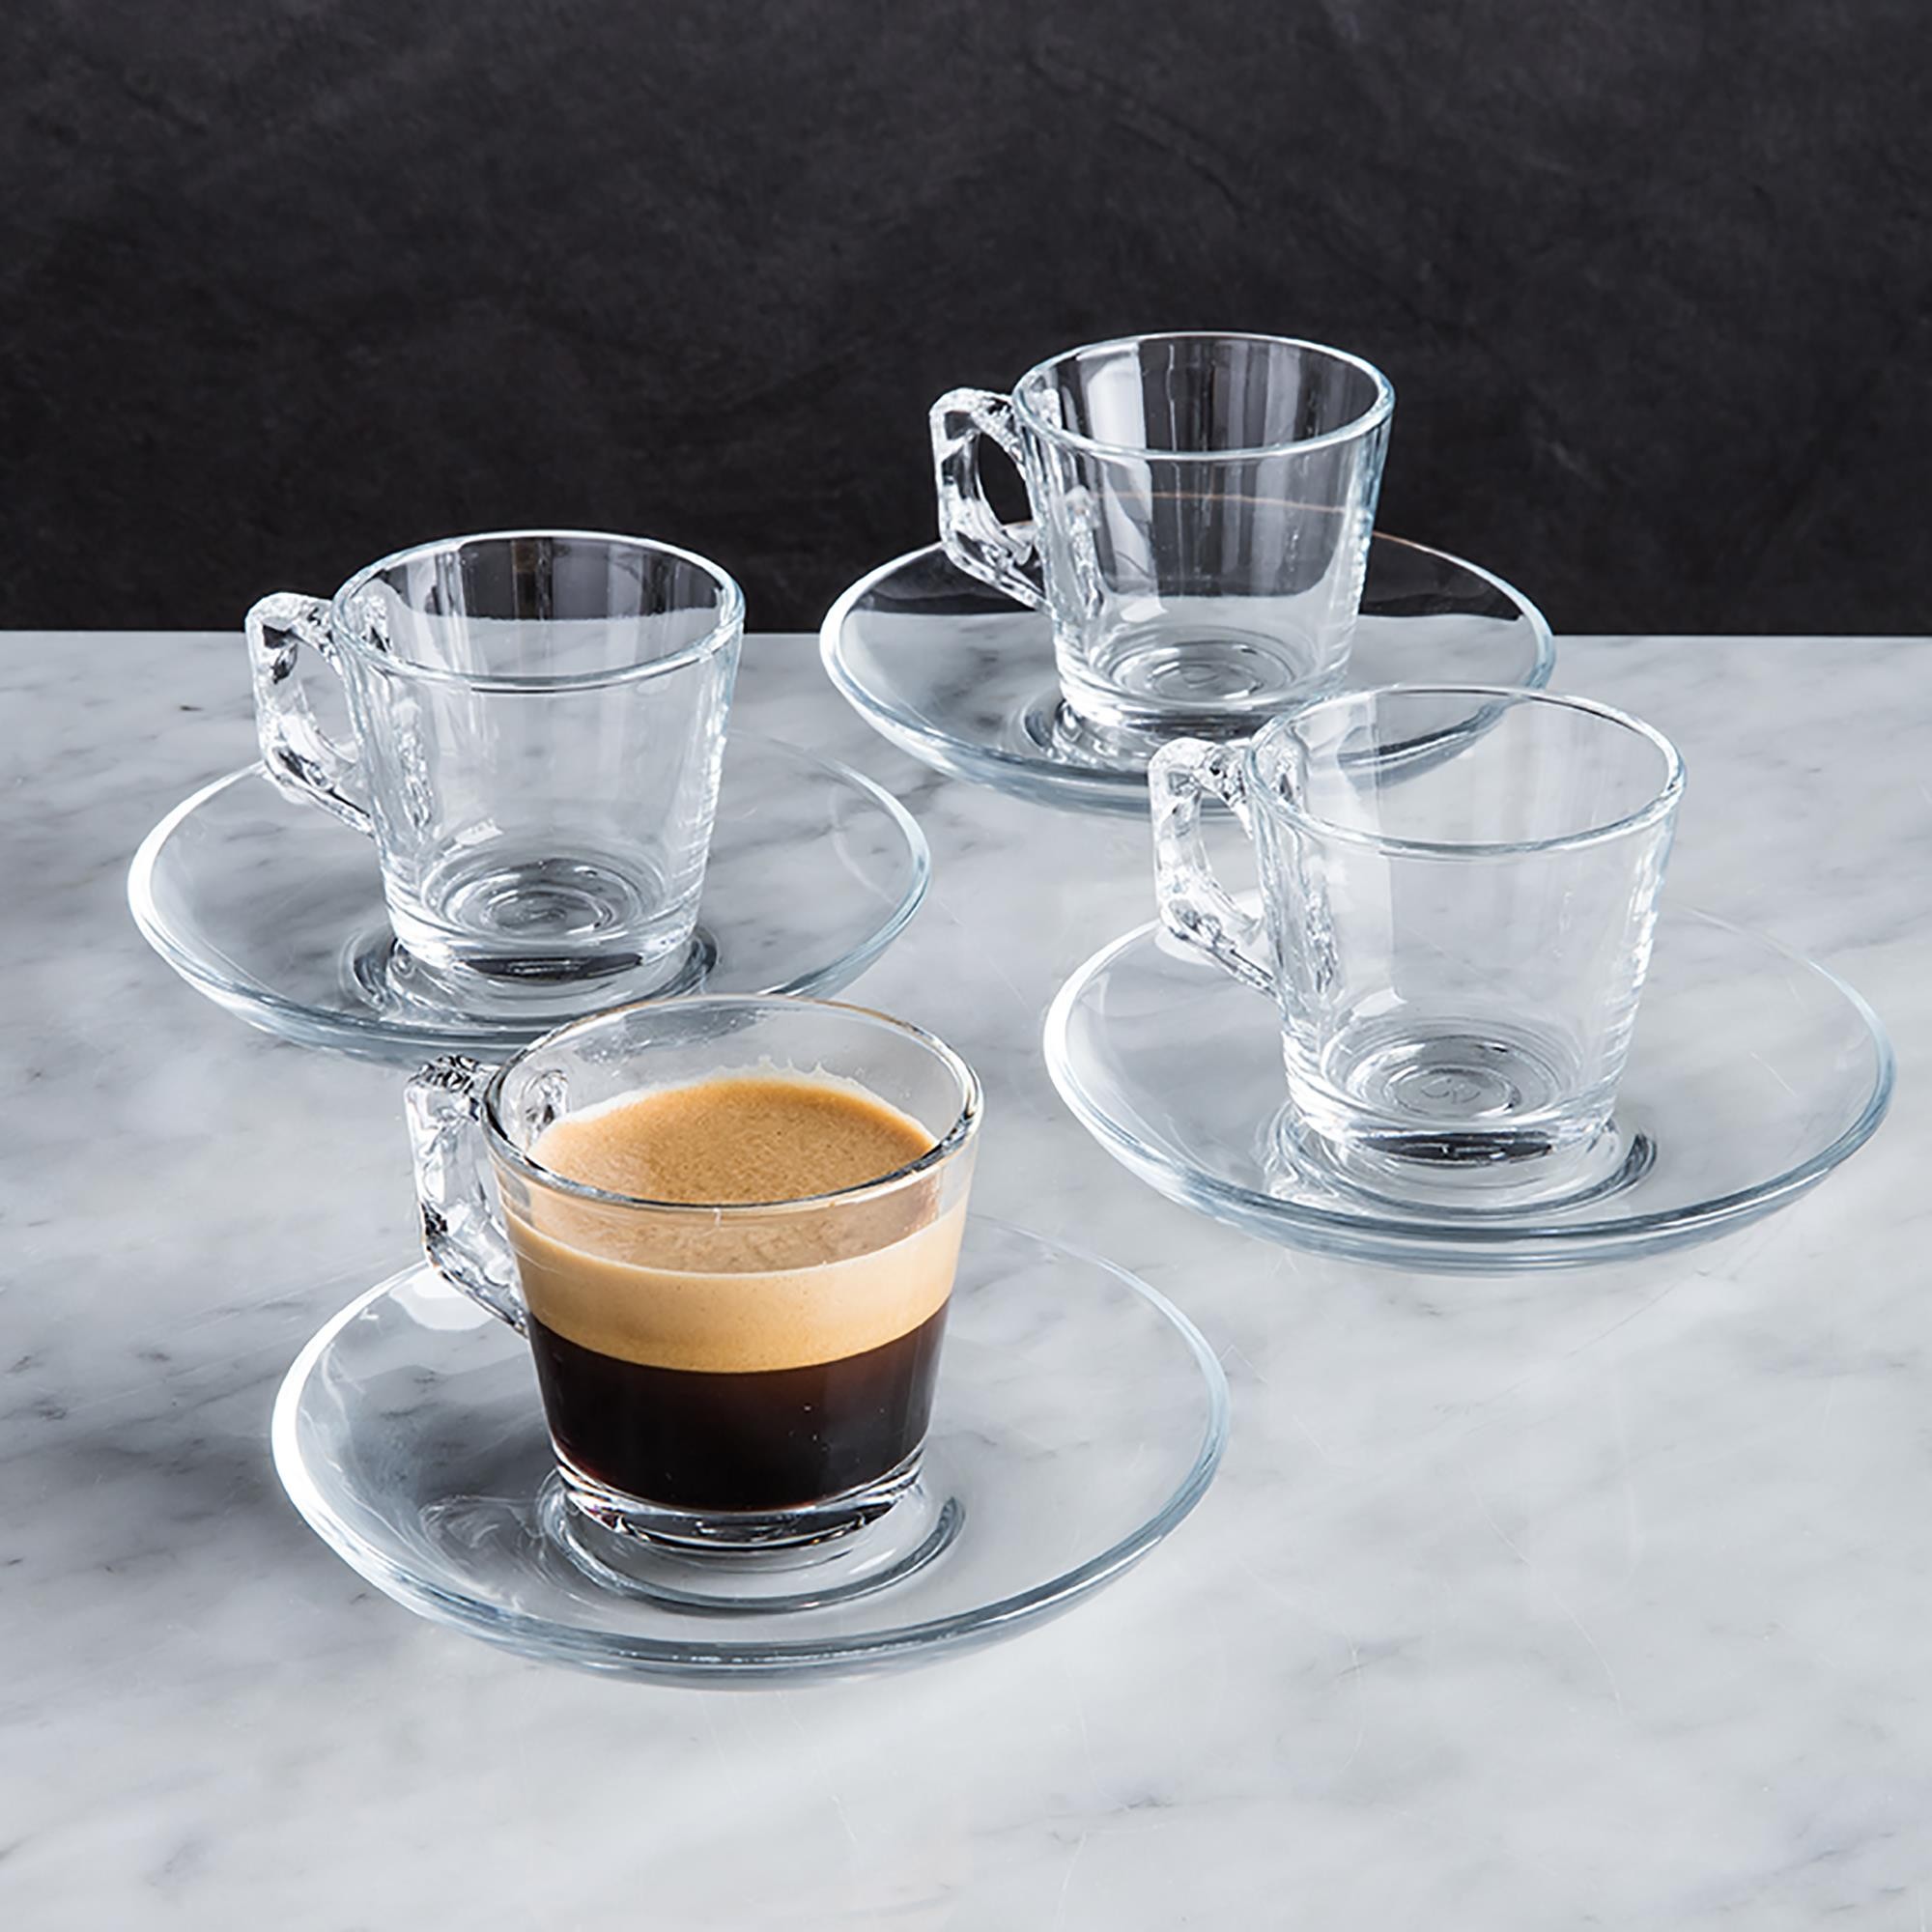 chiết xuất cafe espresso có lớp crema